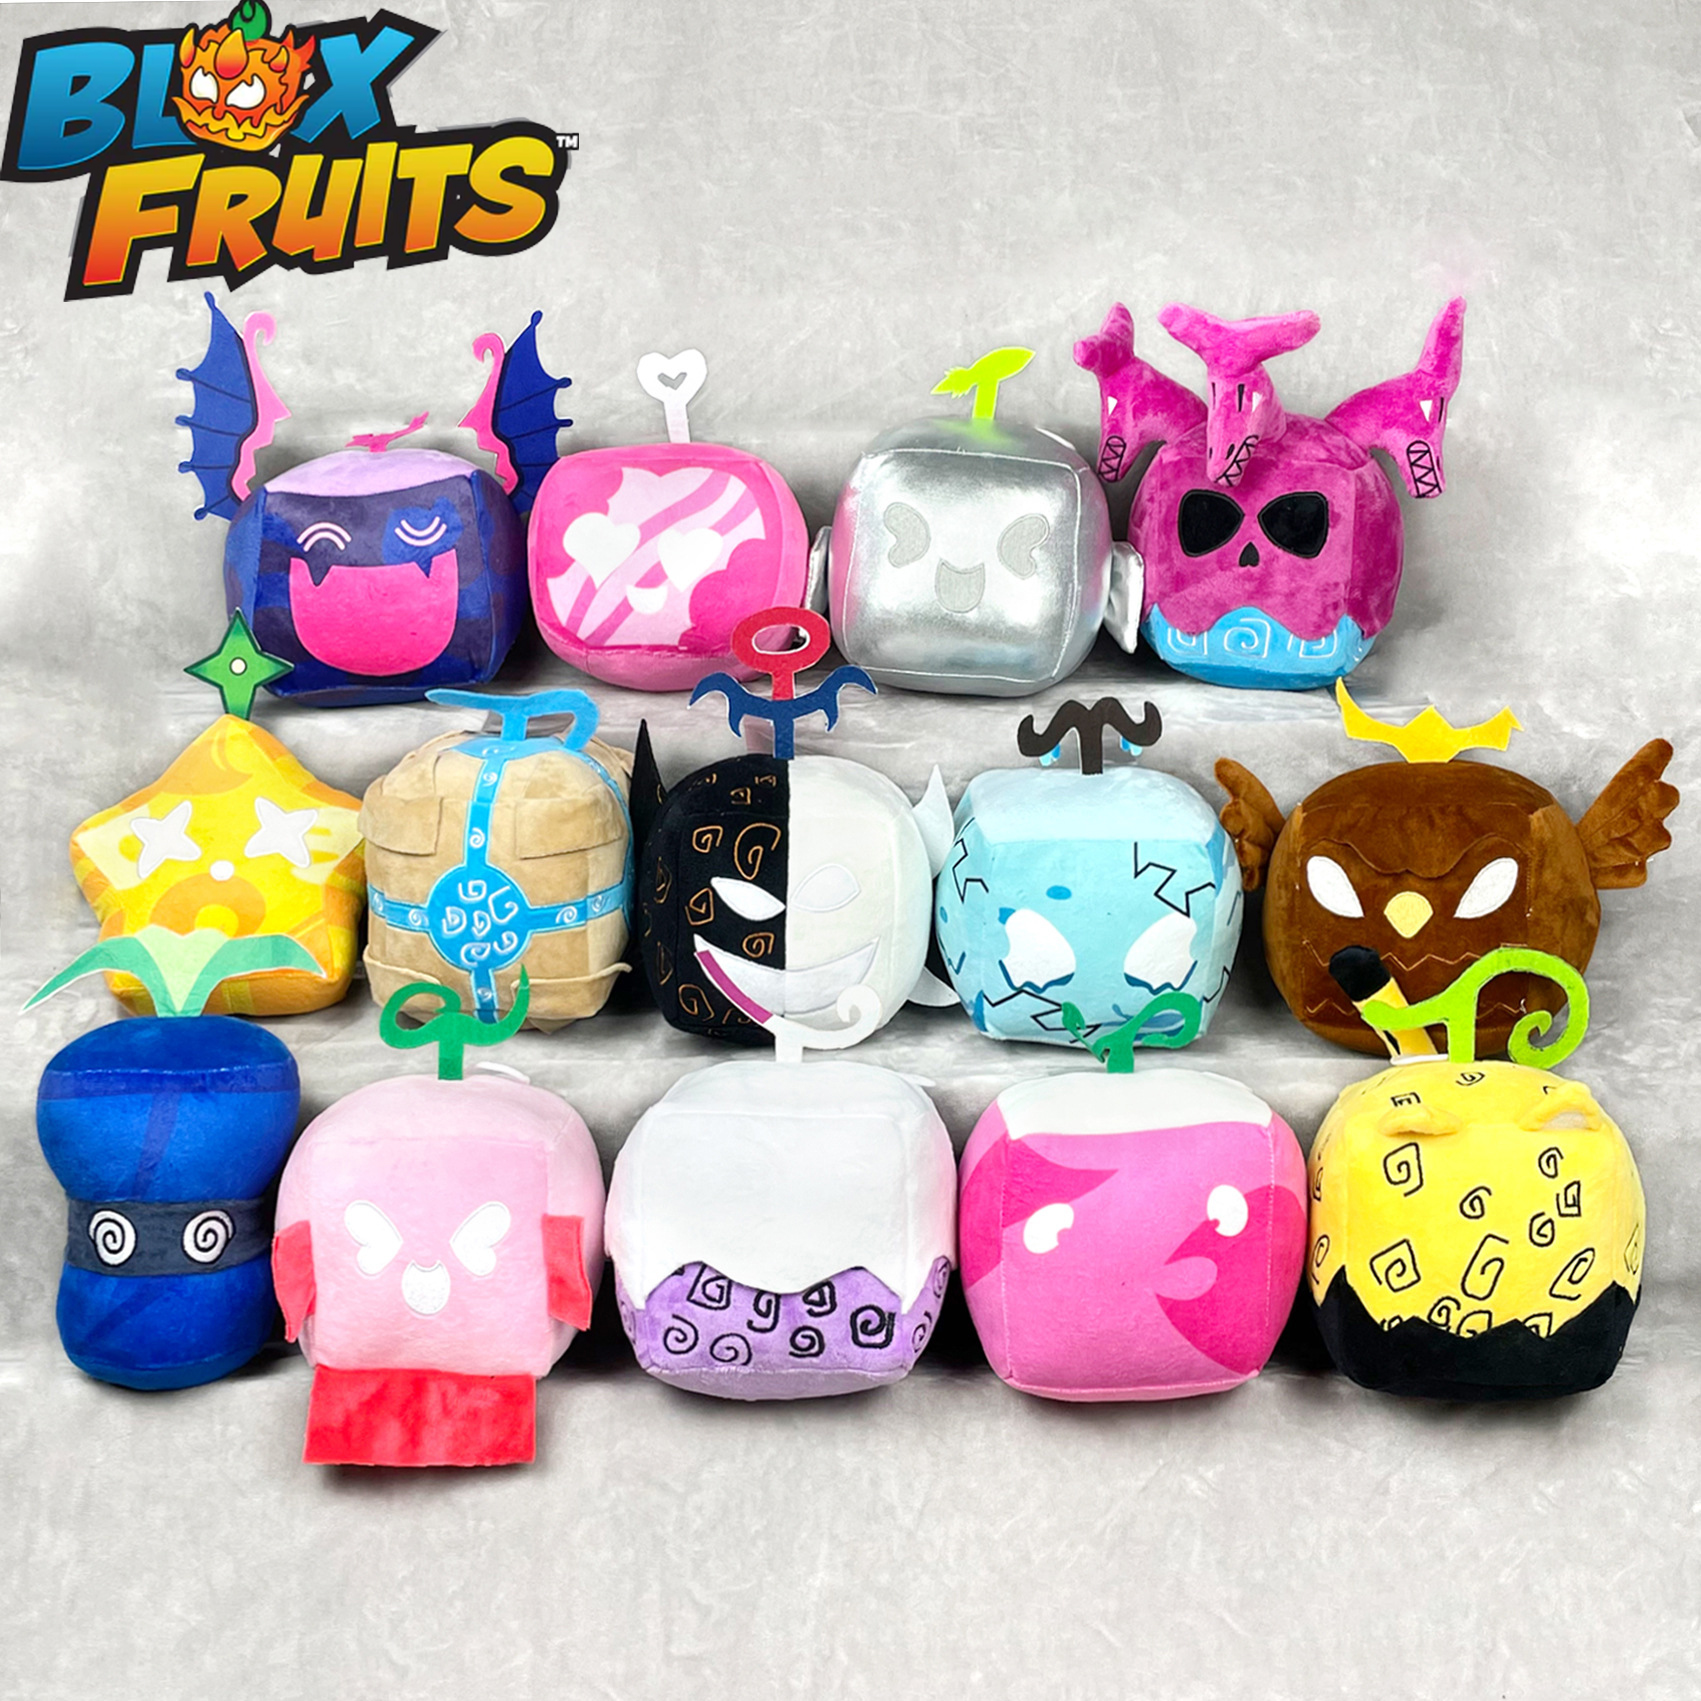 Cute Blox Fruits Plush Toy Cartoon Adventure Game Soft Stuffed